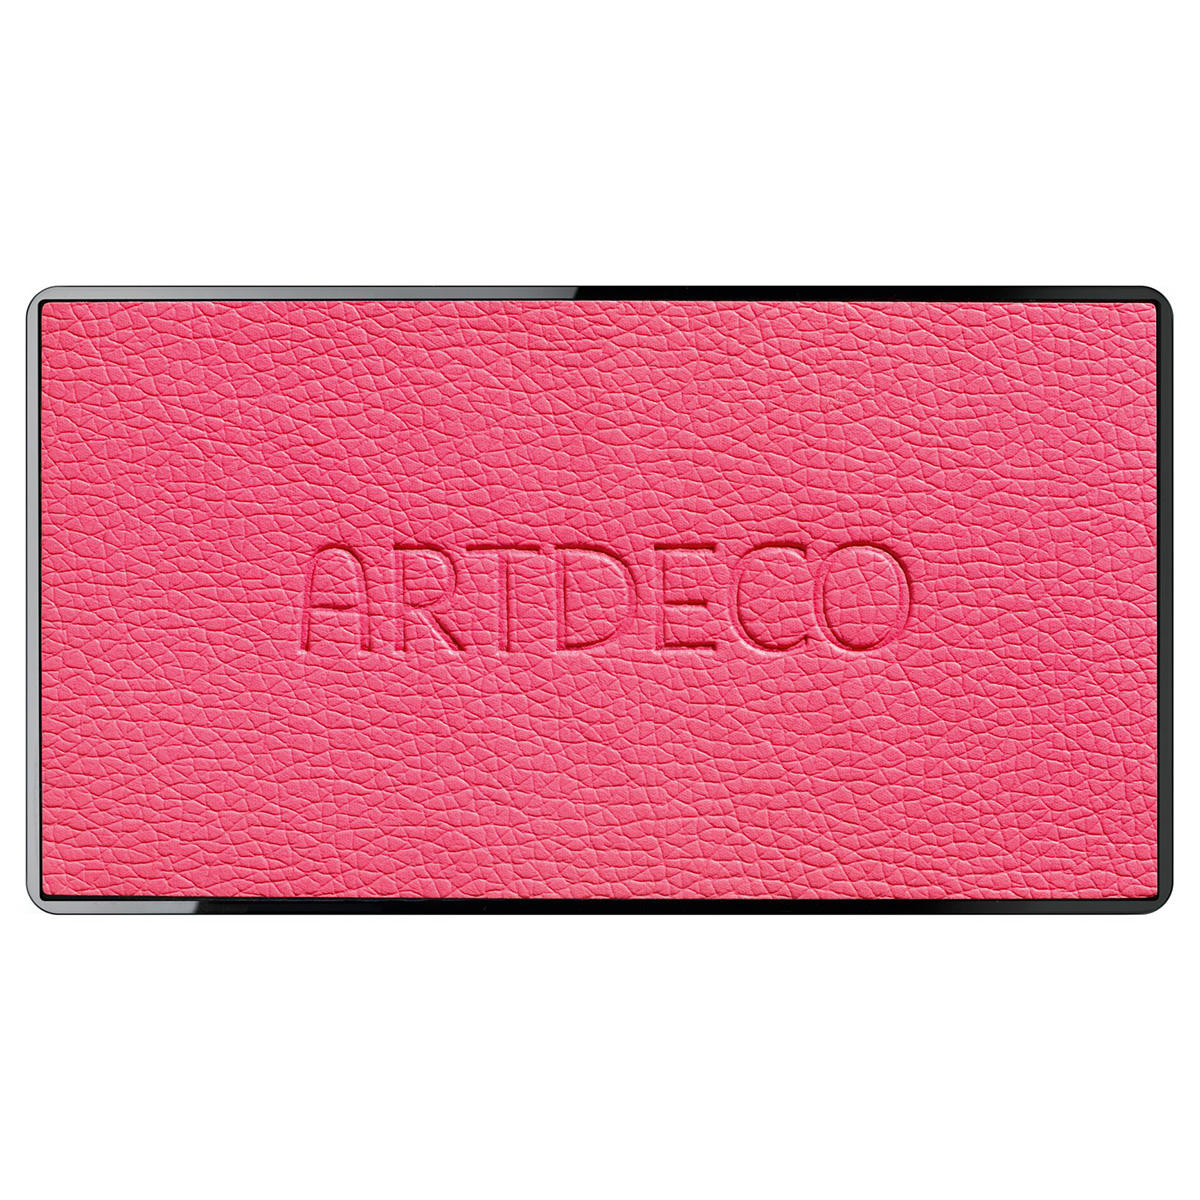 ARTDECO Eyelights Palette Turn Up The Heat Limited Edition 1 Stück - 2